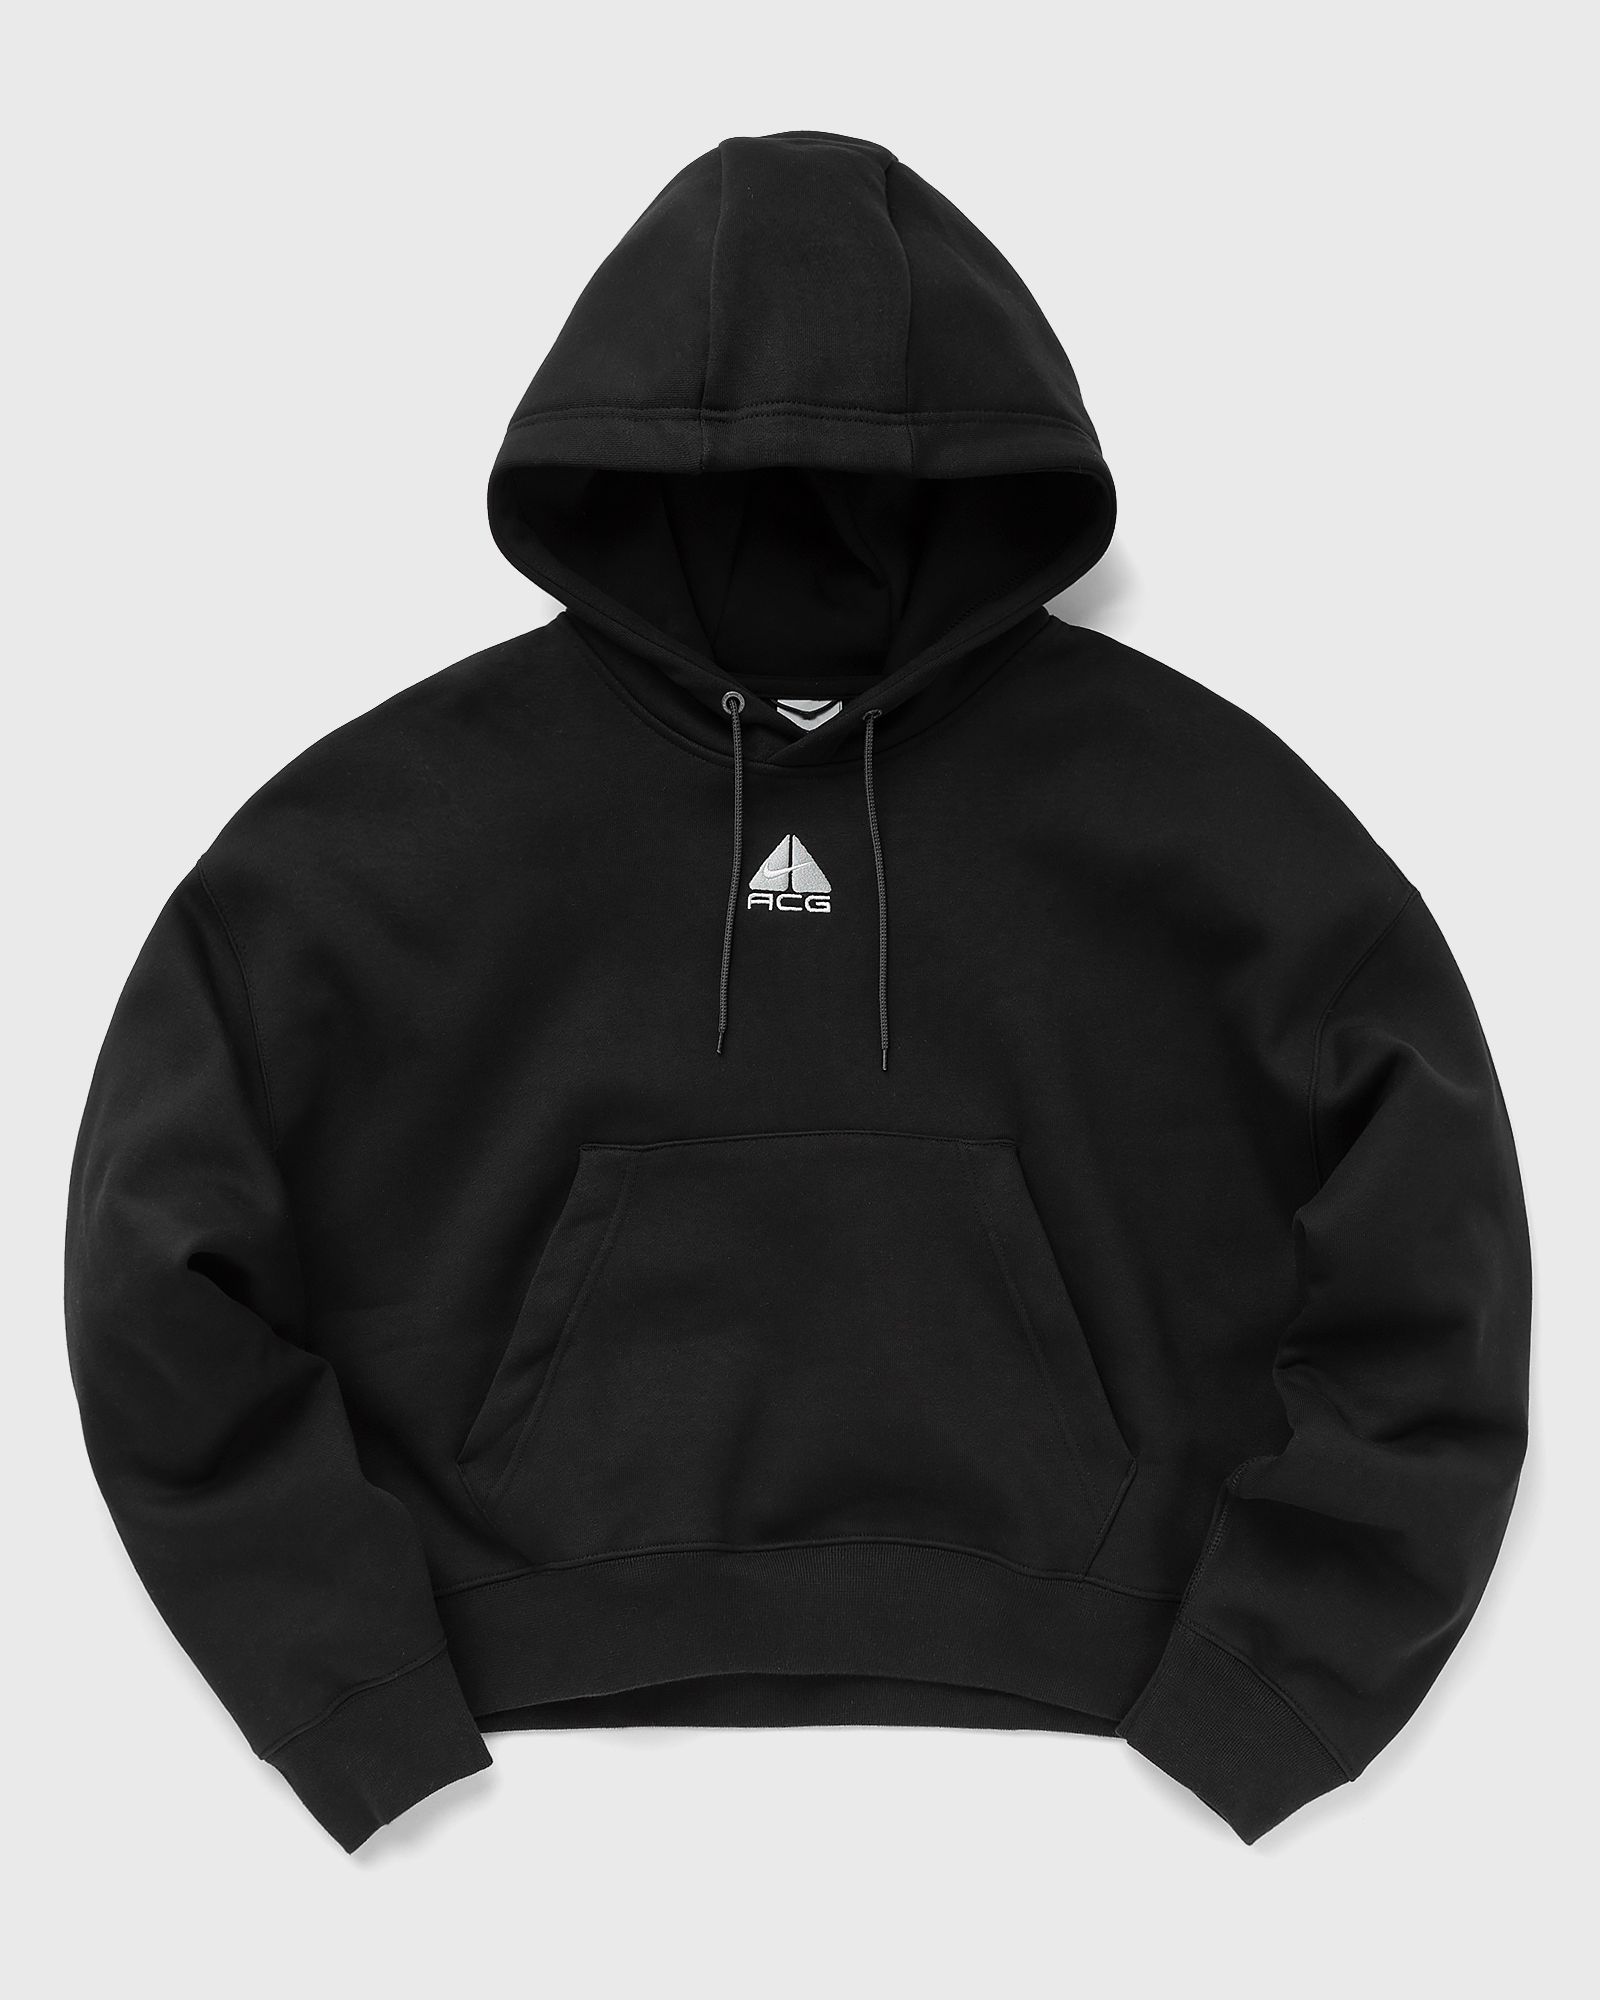 Nike - wmns acg therma-fit "tuff knit" fleece hoodie women hoodies black in größe:l